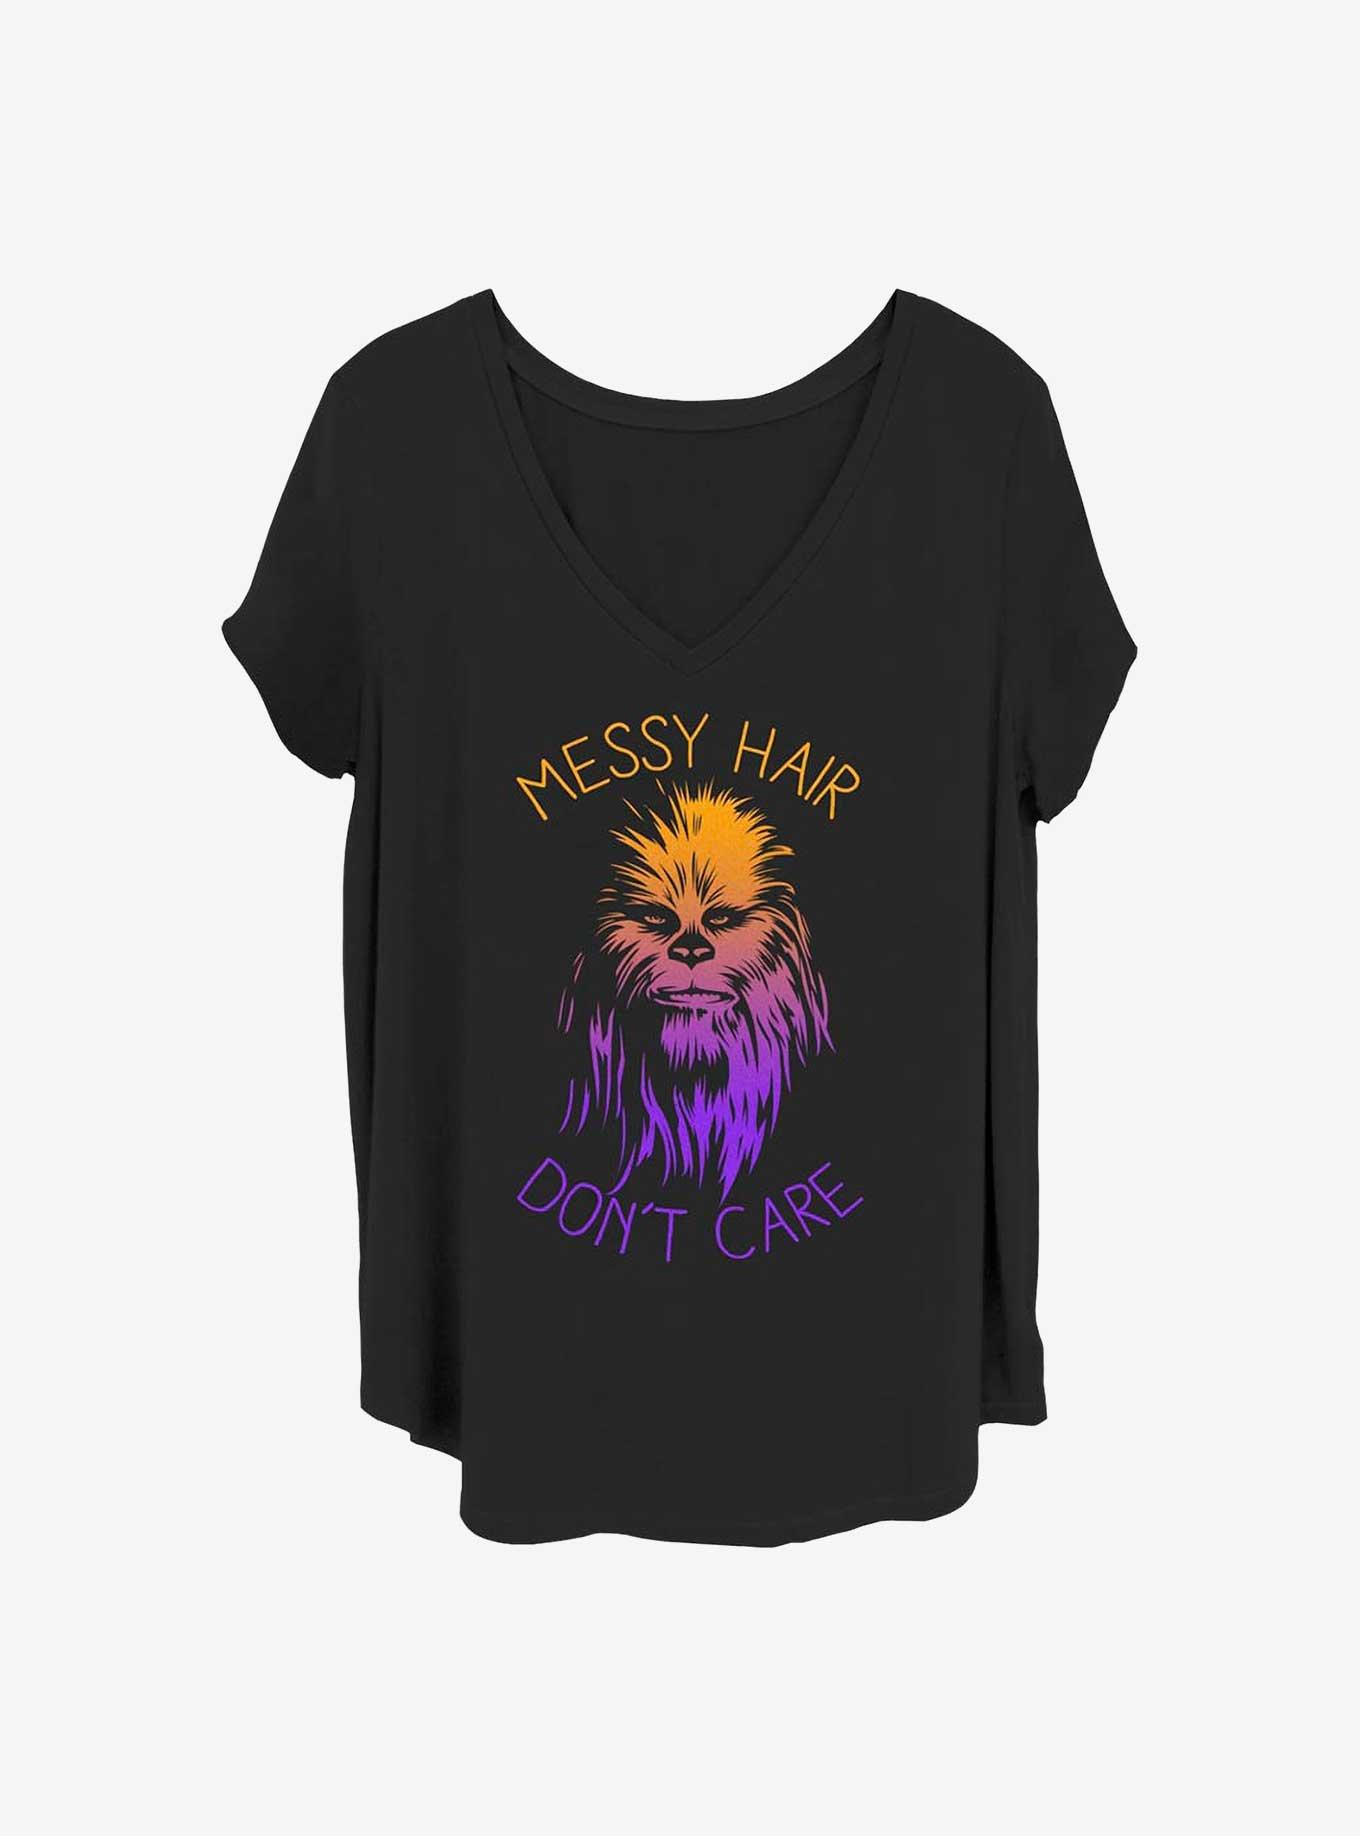 Star Wars Messy Hairs Girls T-Shirt Plus